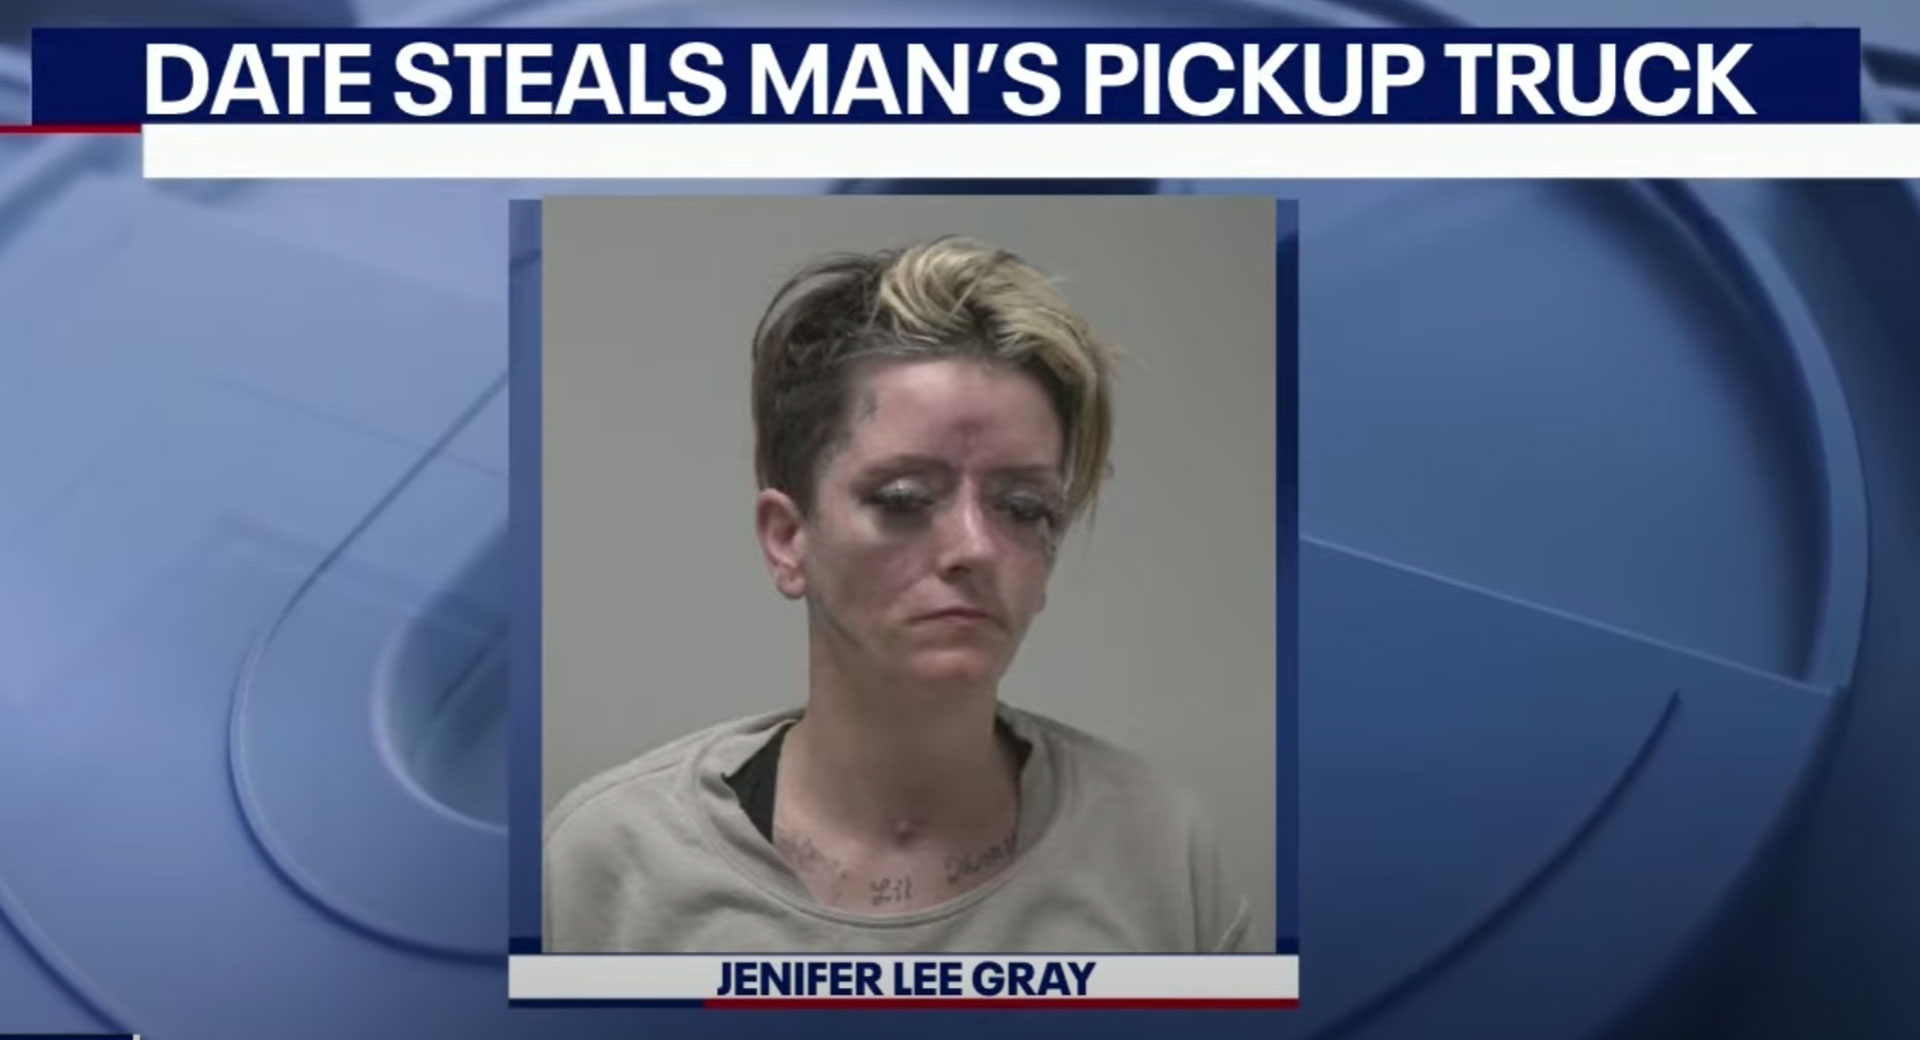 Jennifer Lee Gray, la mujer que robó una camioneta en la primera cita